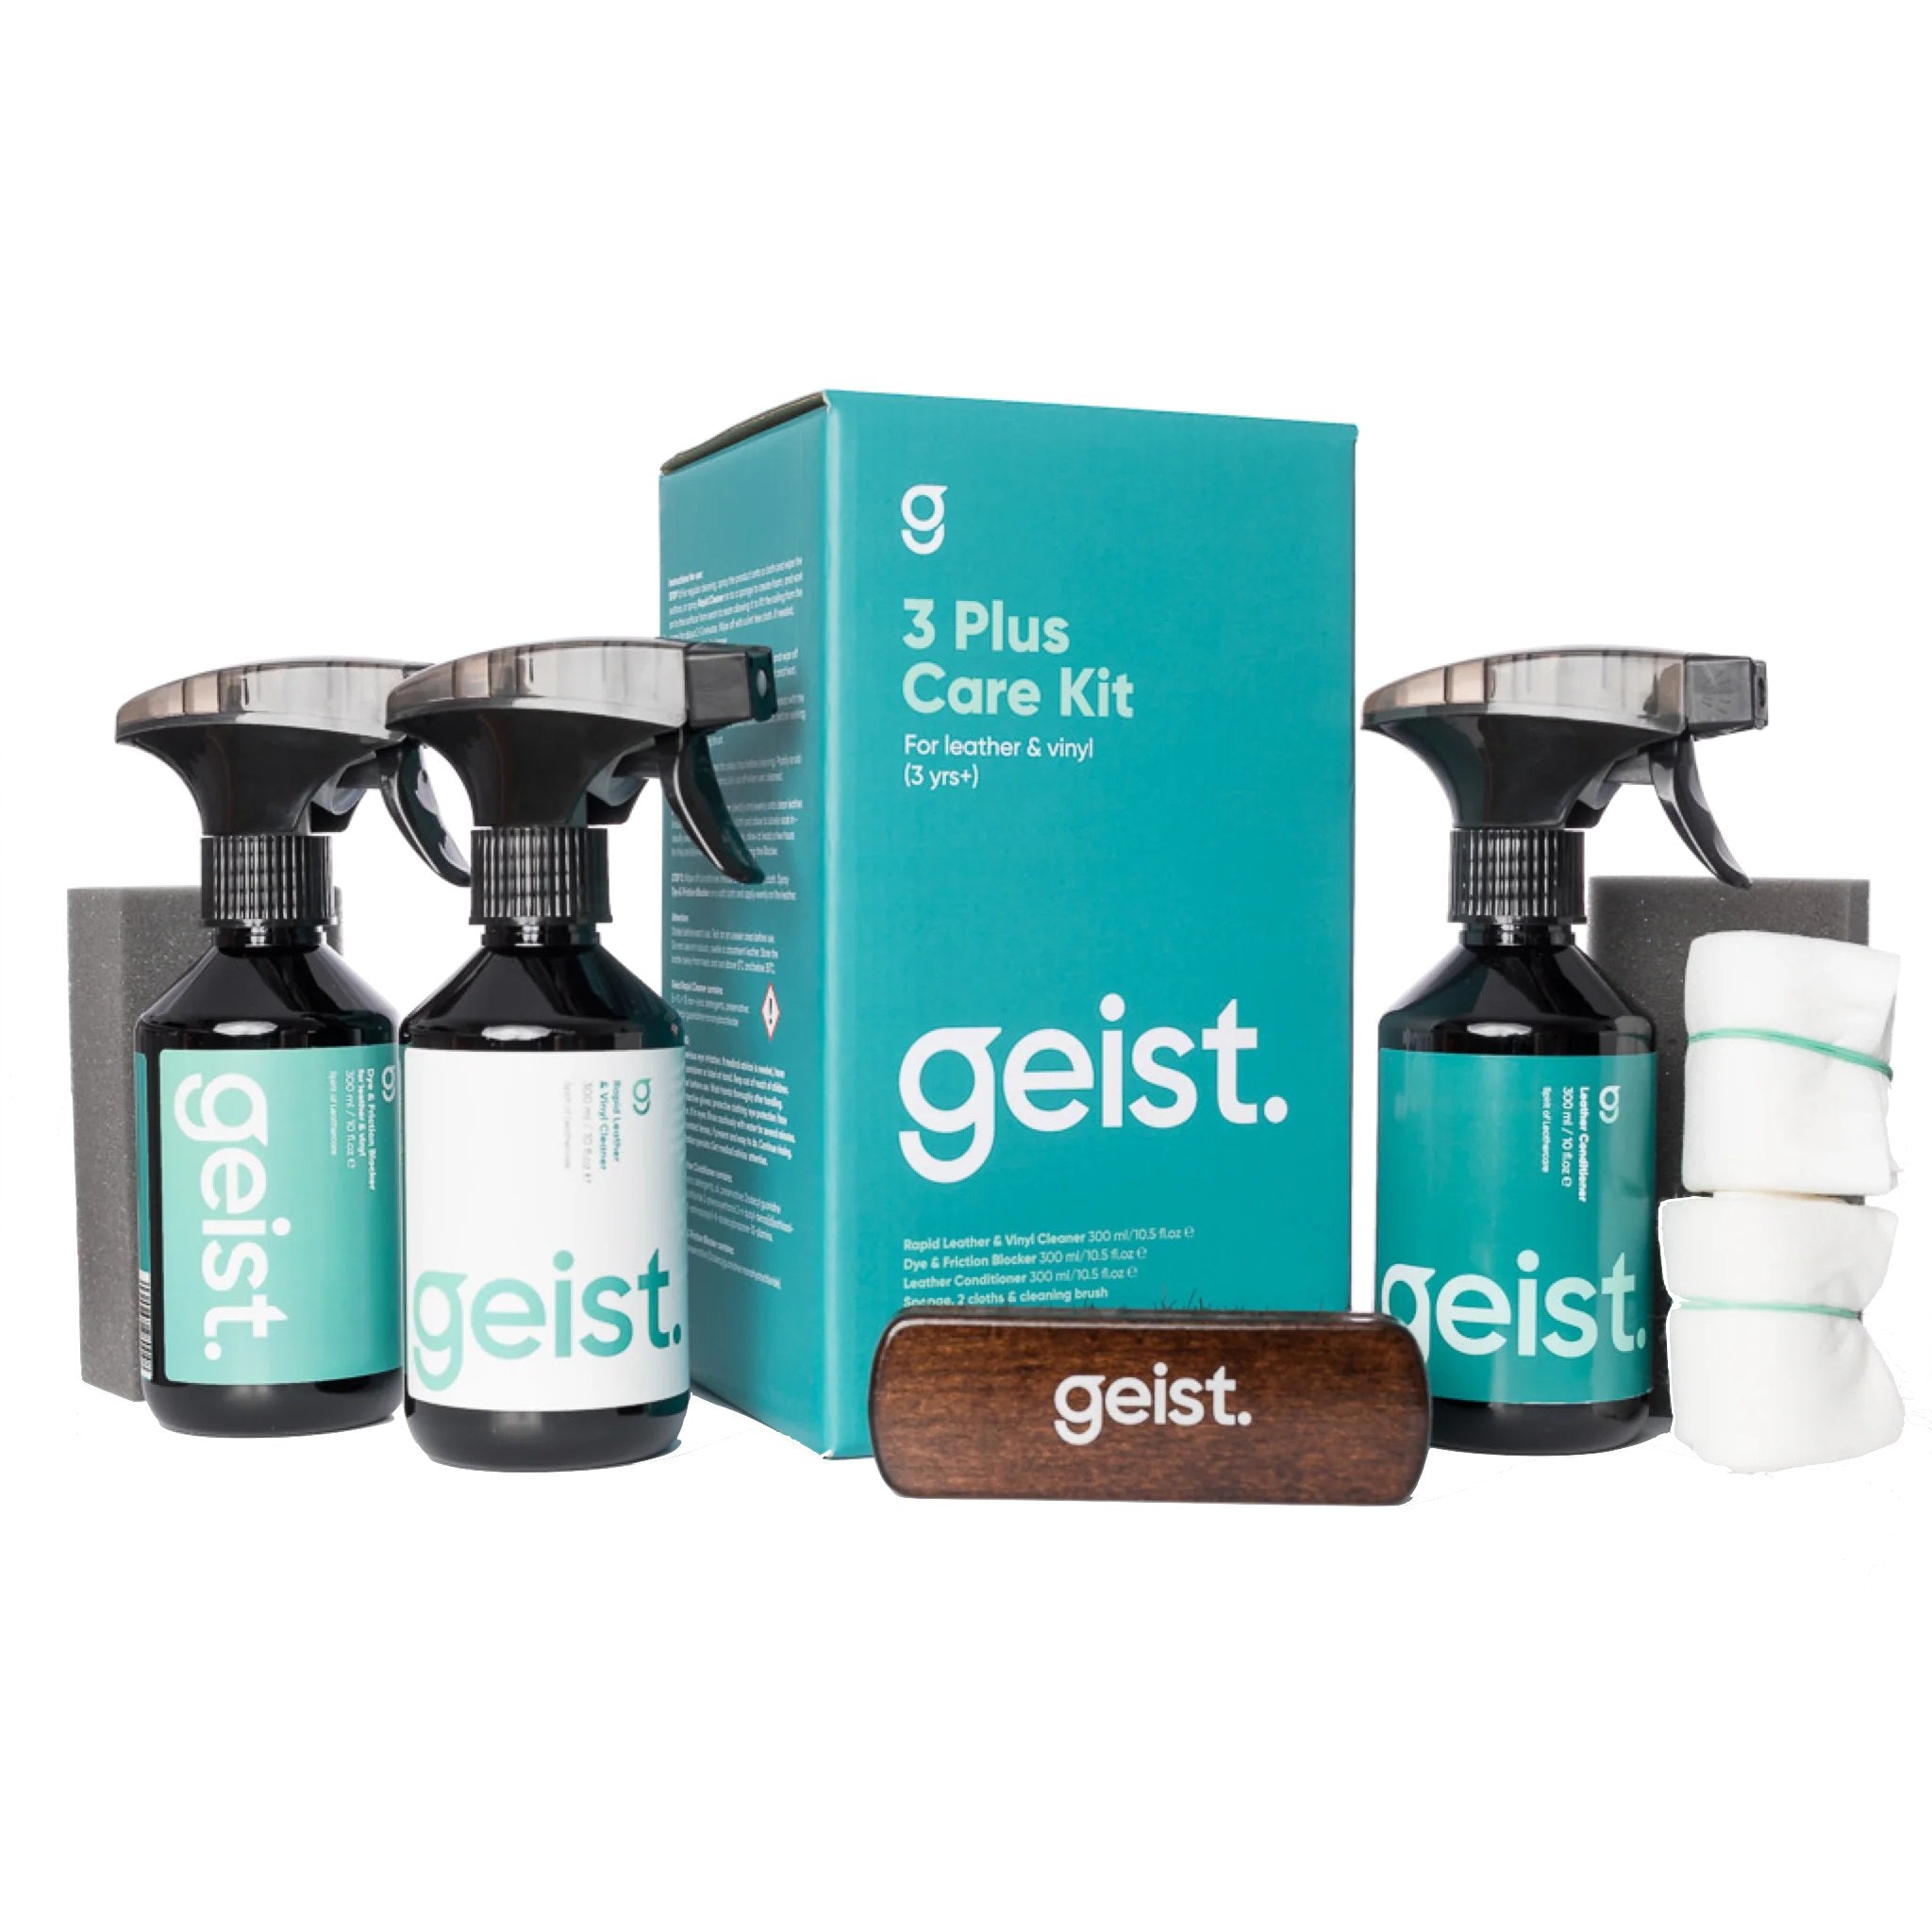 GEIST 3 Plus Care Kit for Leather & Vinyl